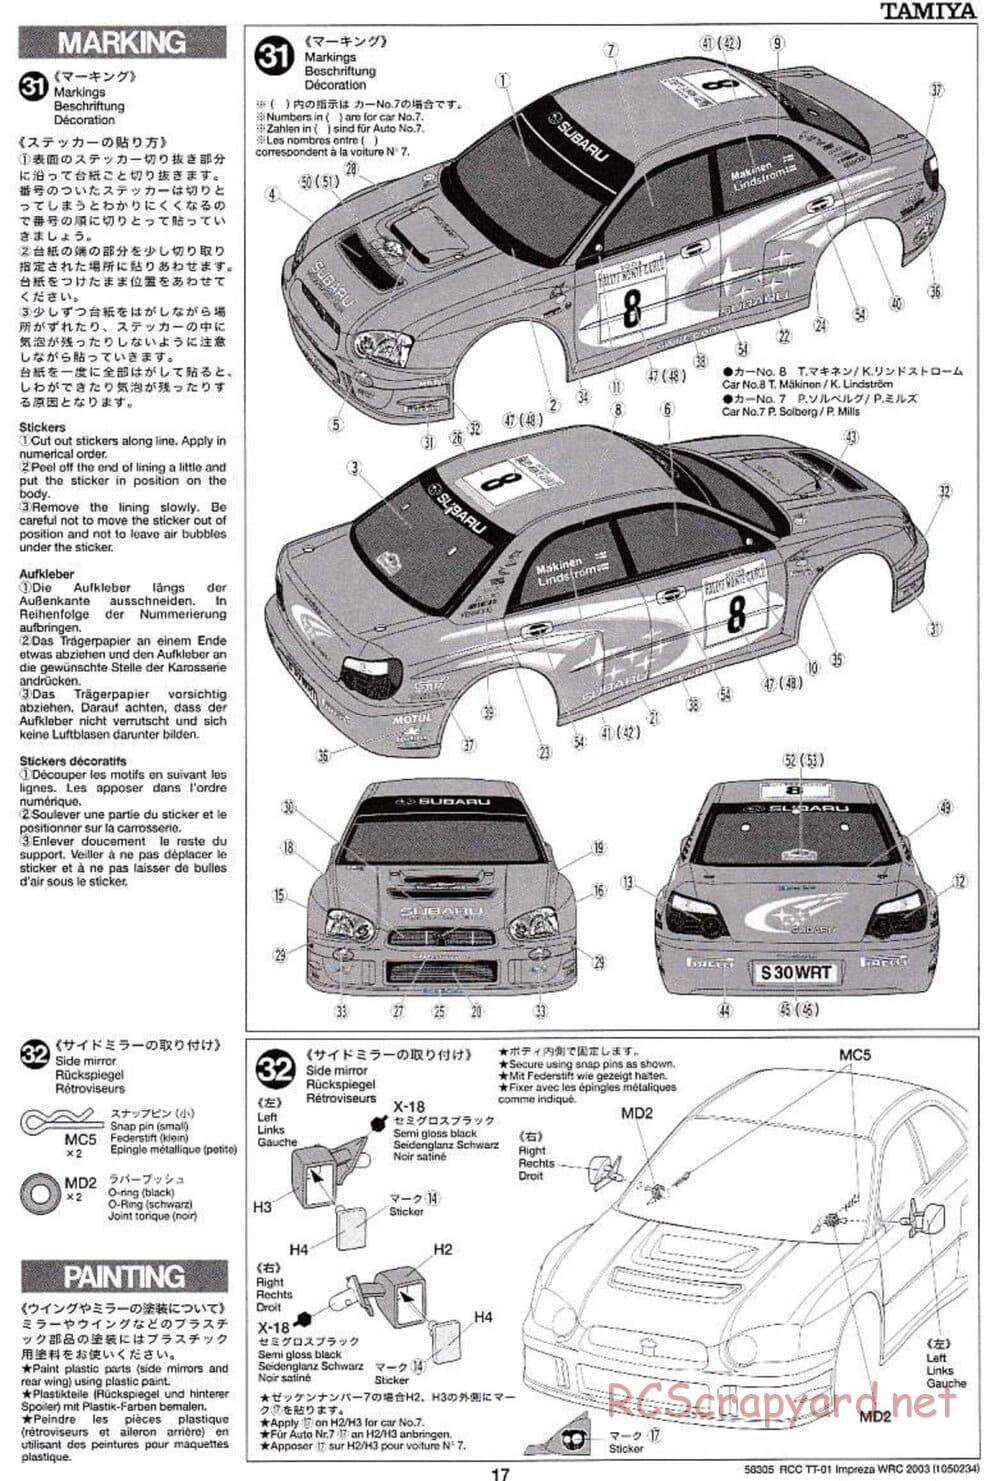 Tamiya - Subaru Impreza WRC 2003 - TT-01 Chassis - Manual - Page 17